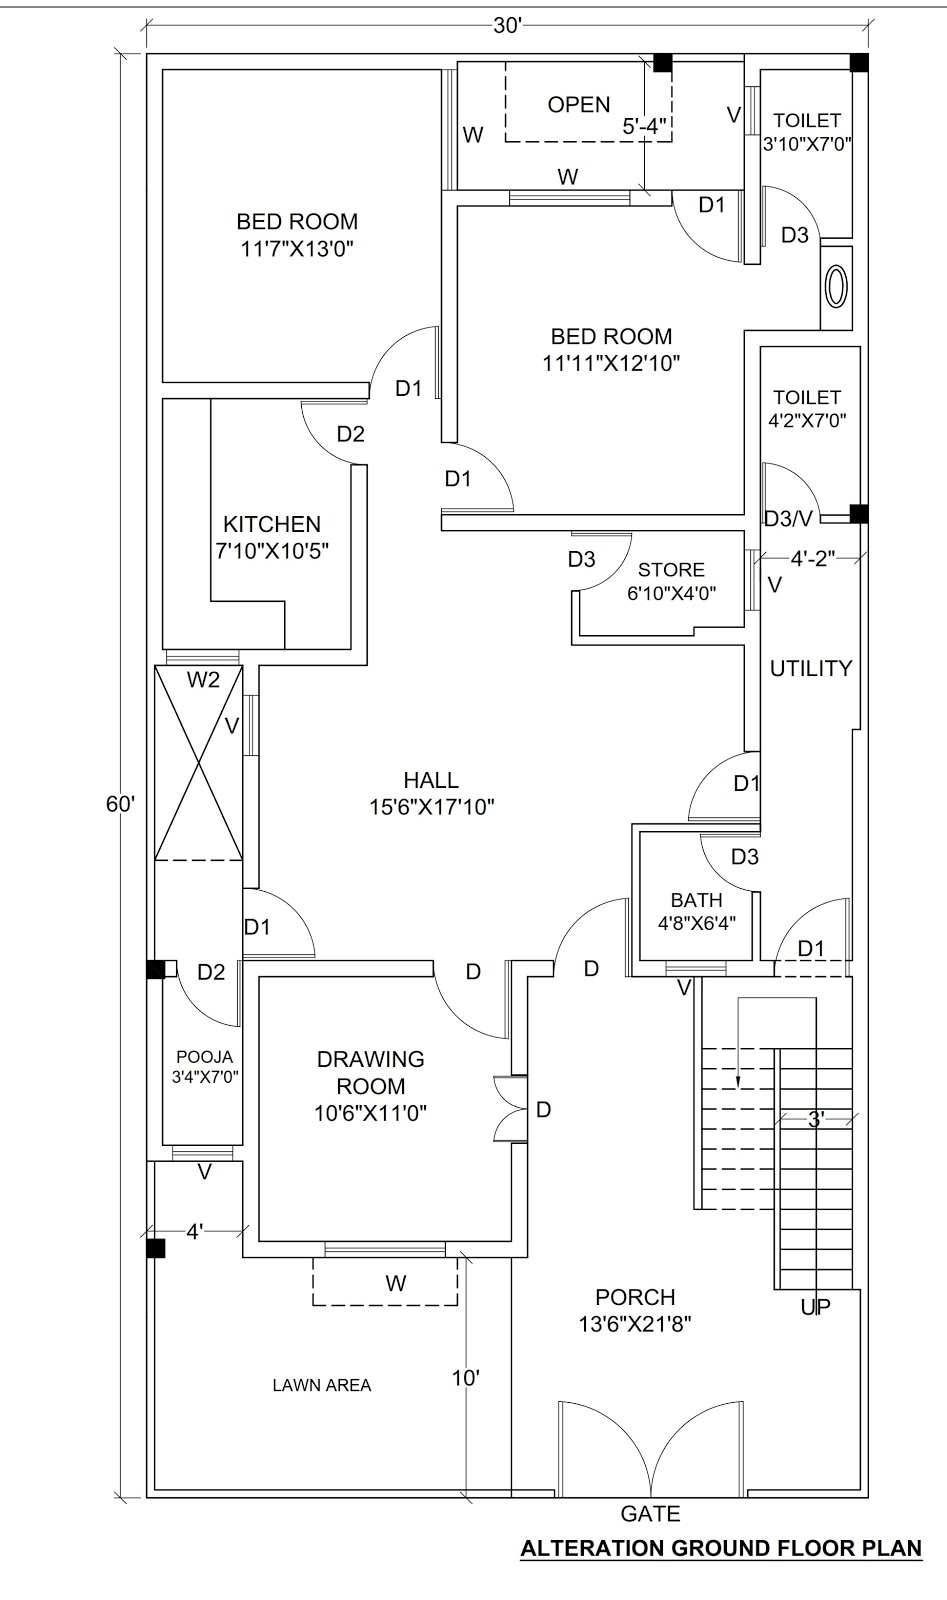  House  Plan  for 30  X  60  1800 sq ft Housewala